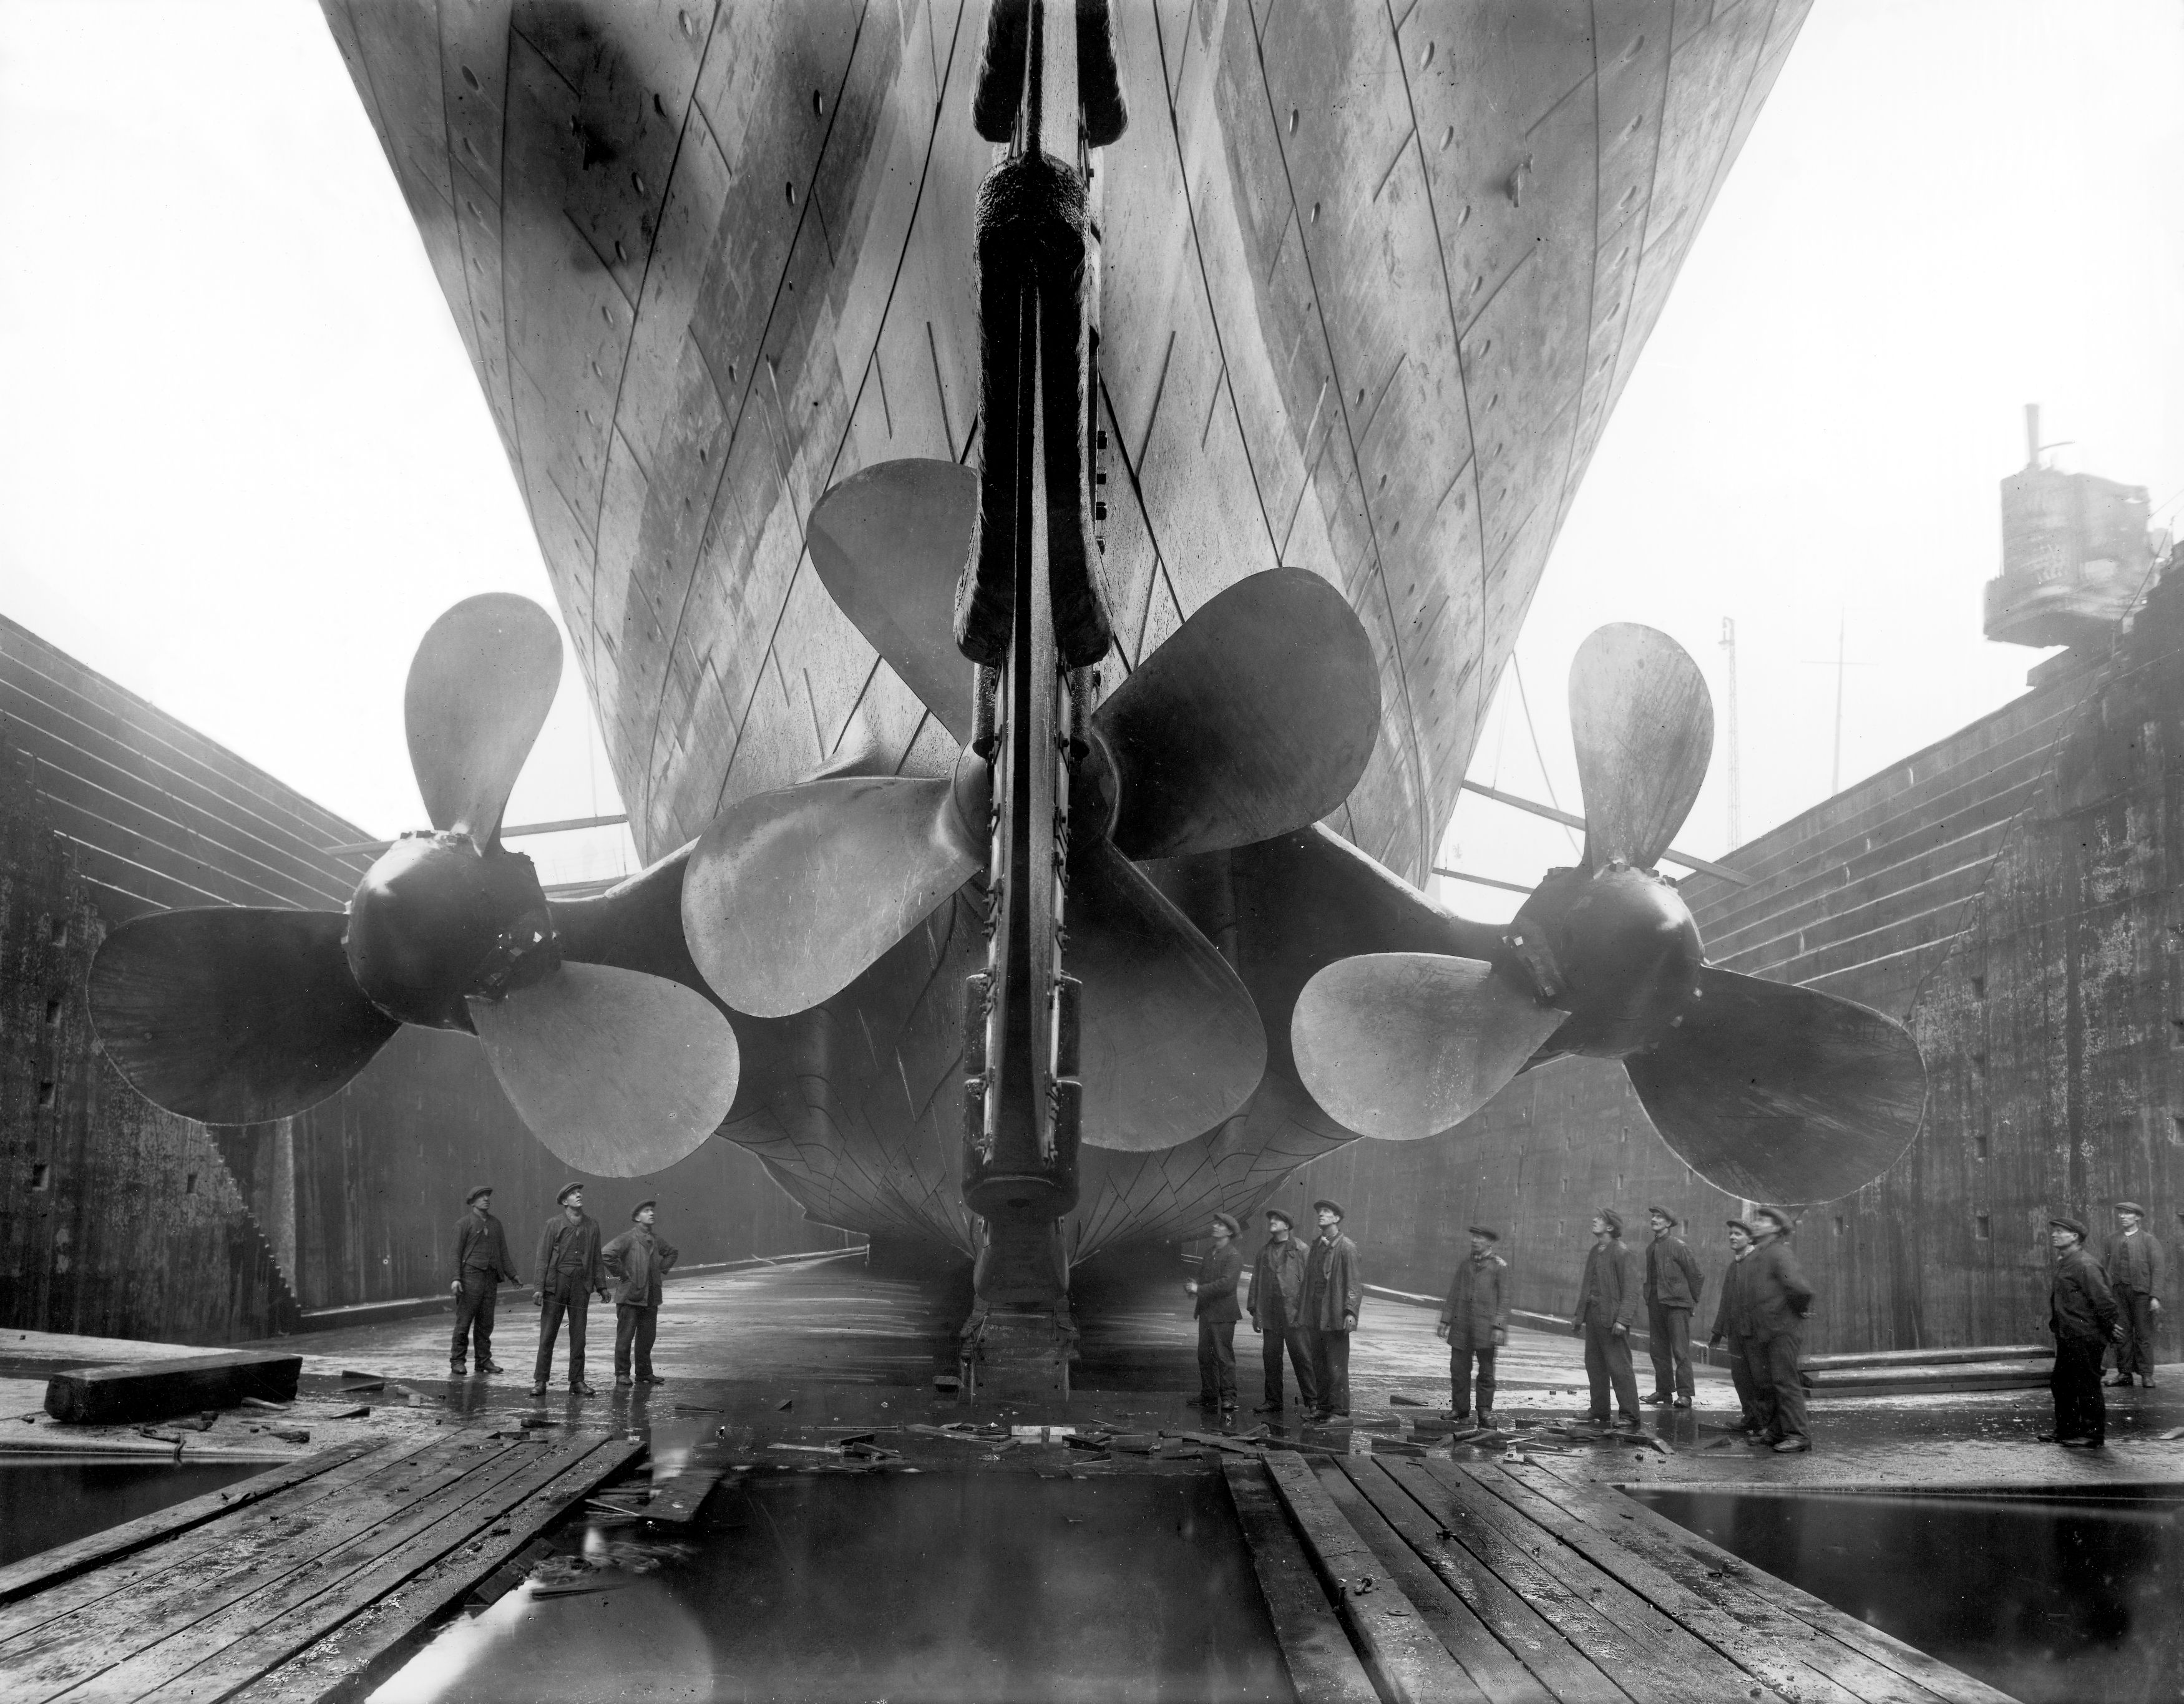 Titanics propellers